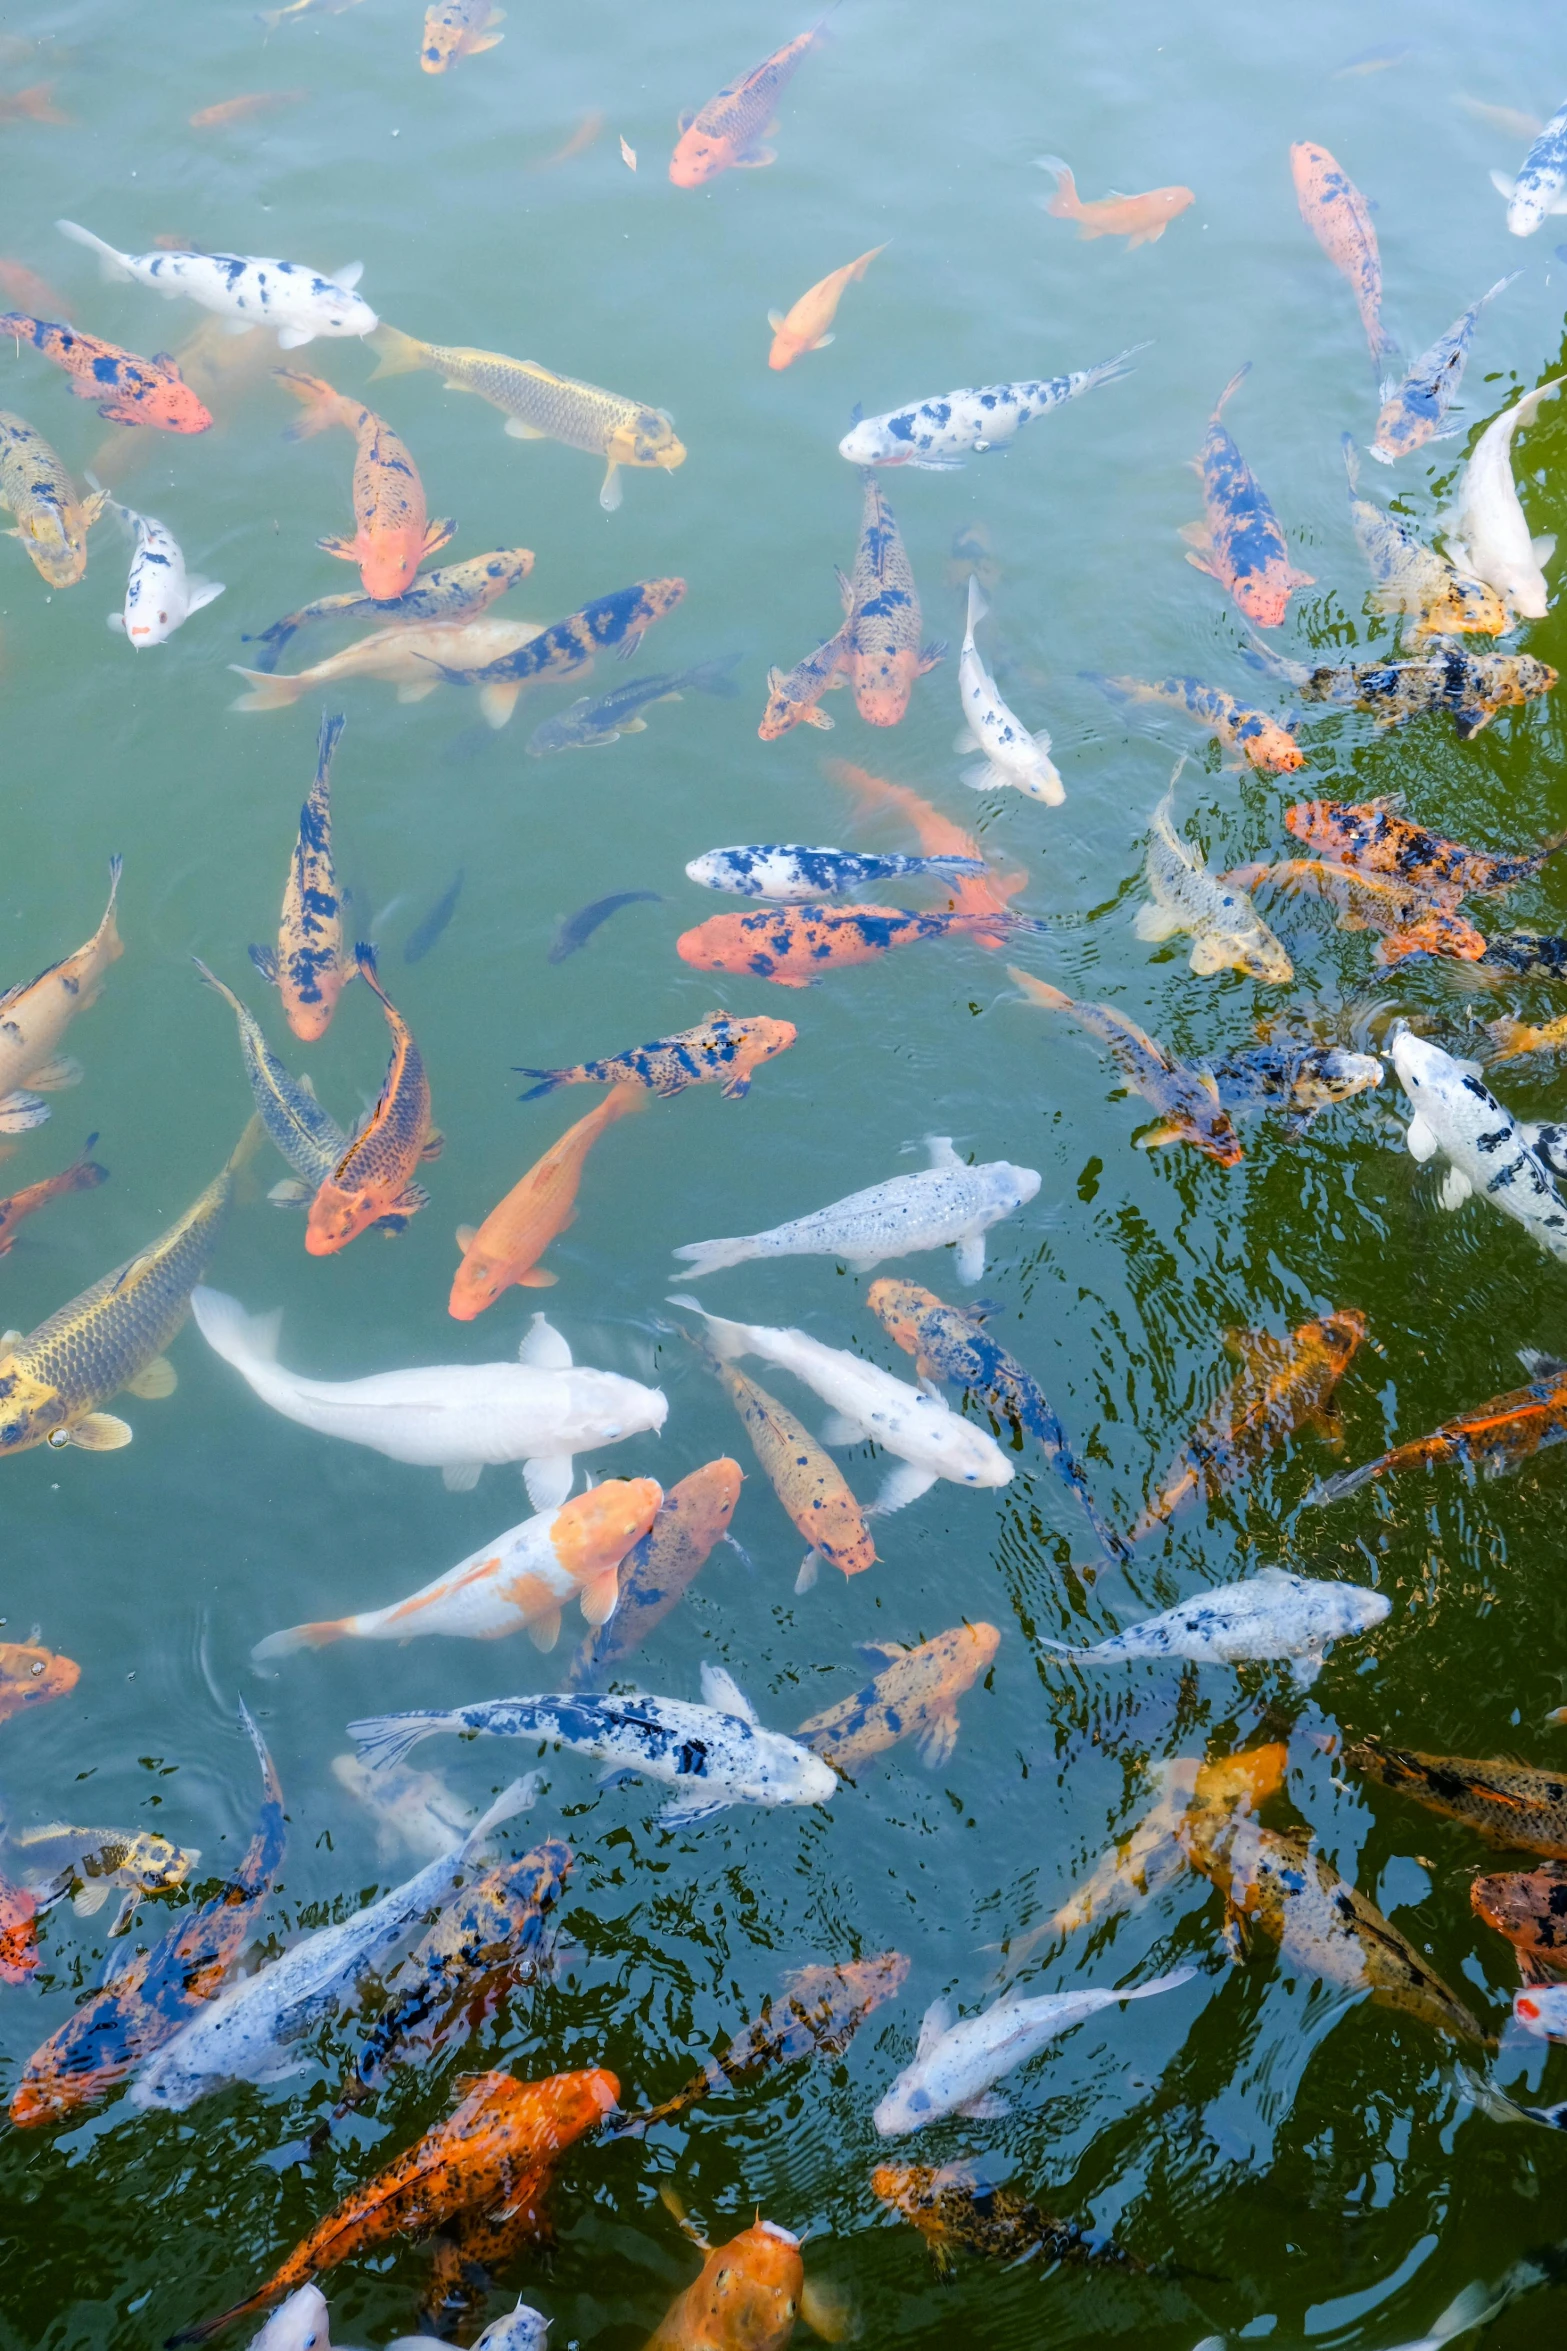 many koi fish are swimming around in the pond